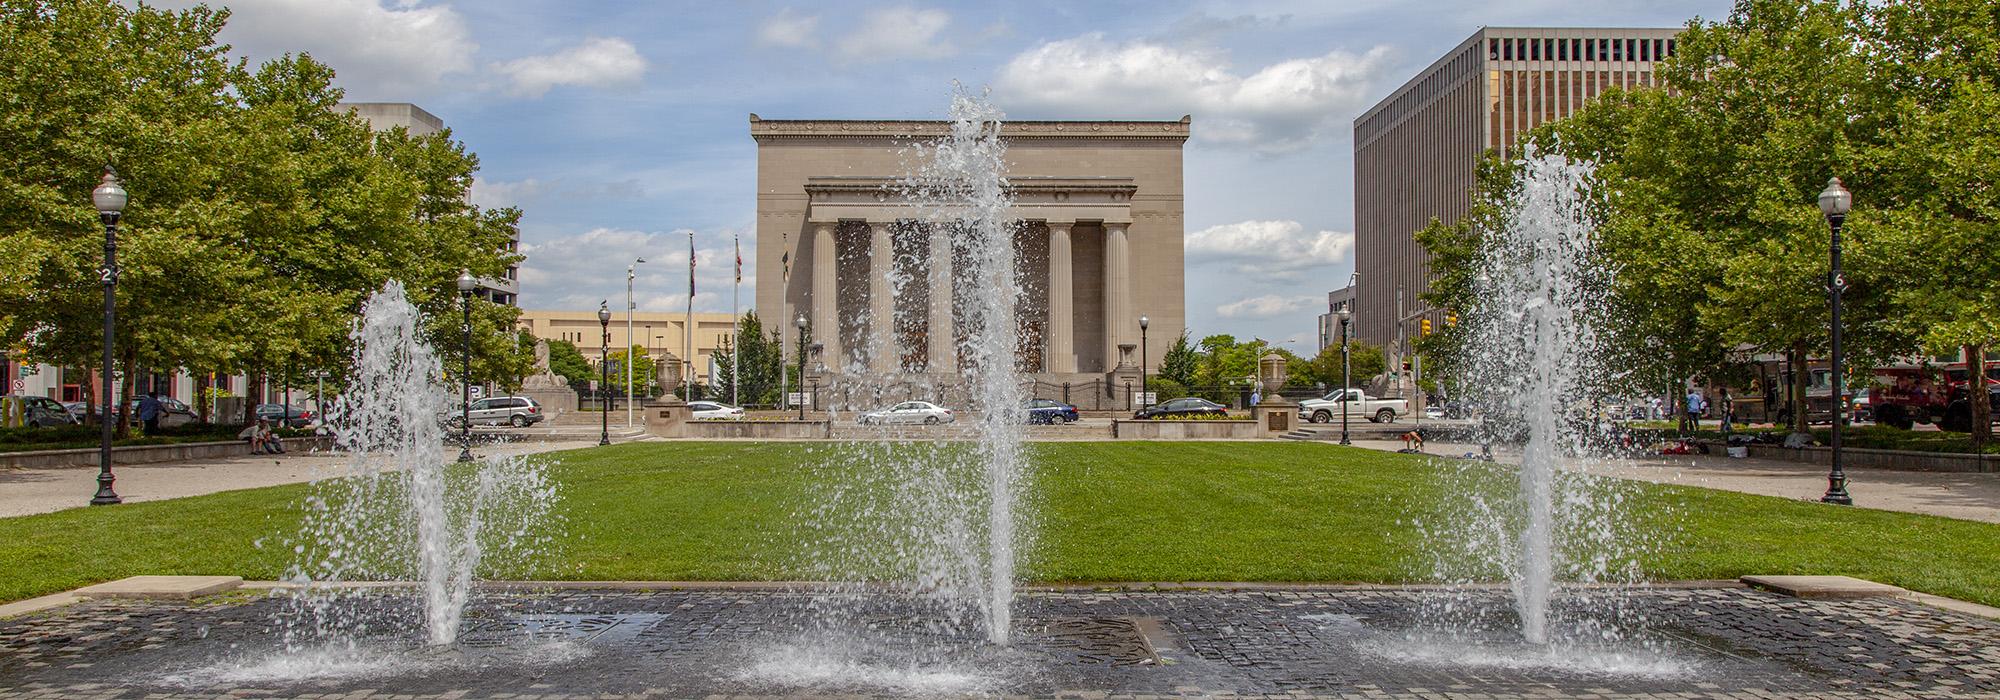 War Memorial Plaza, Baltimore, MD